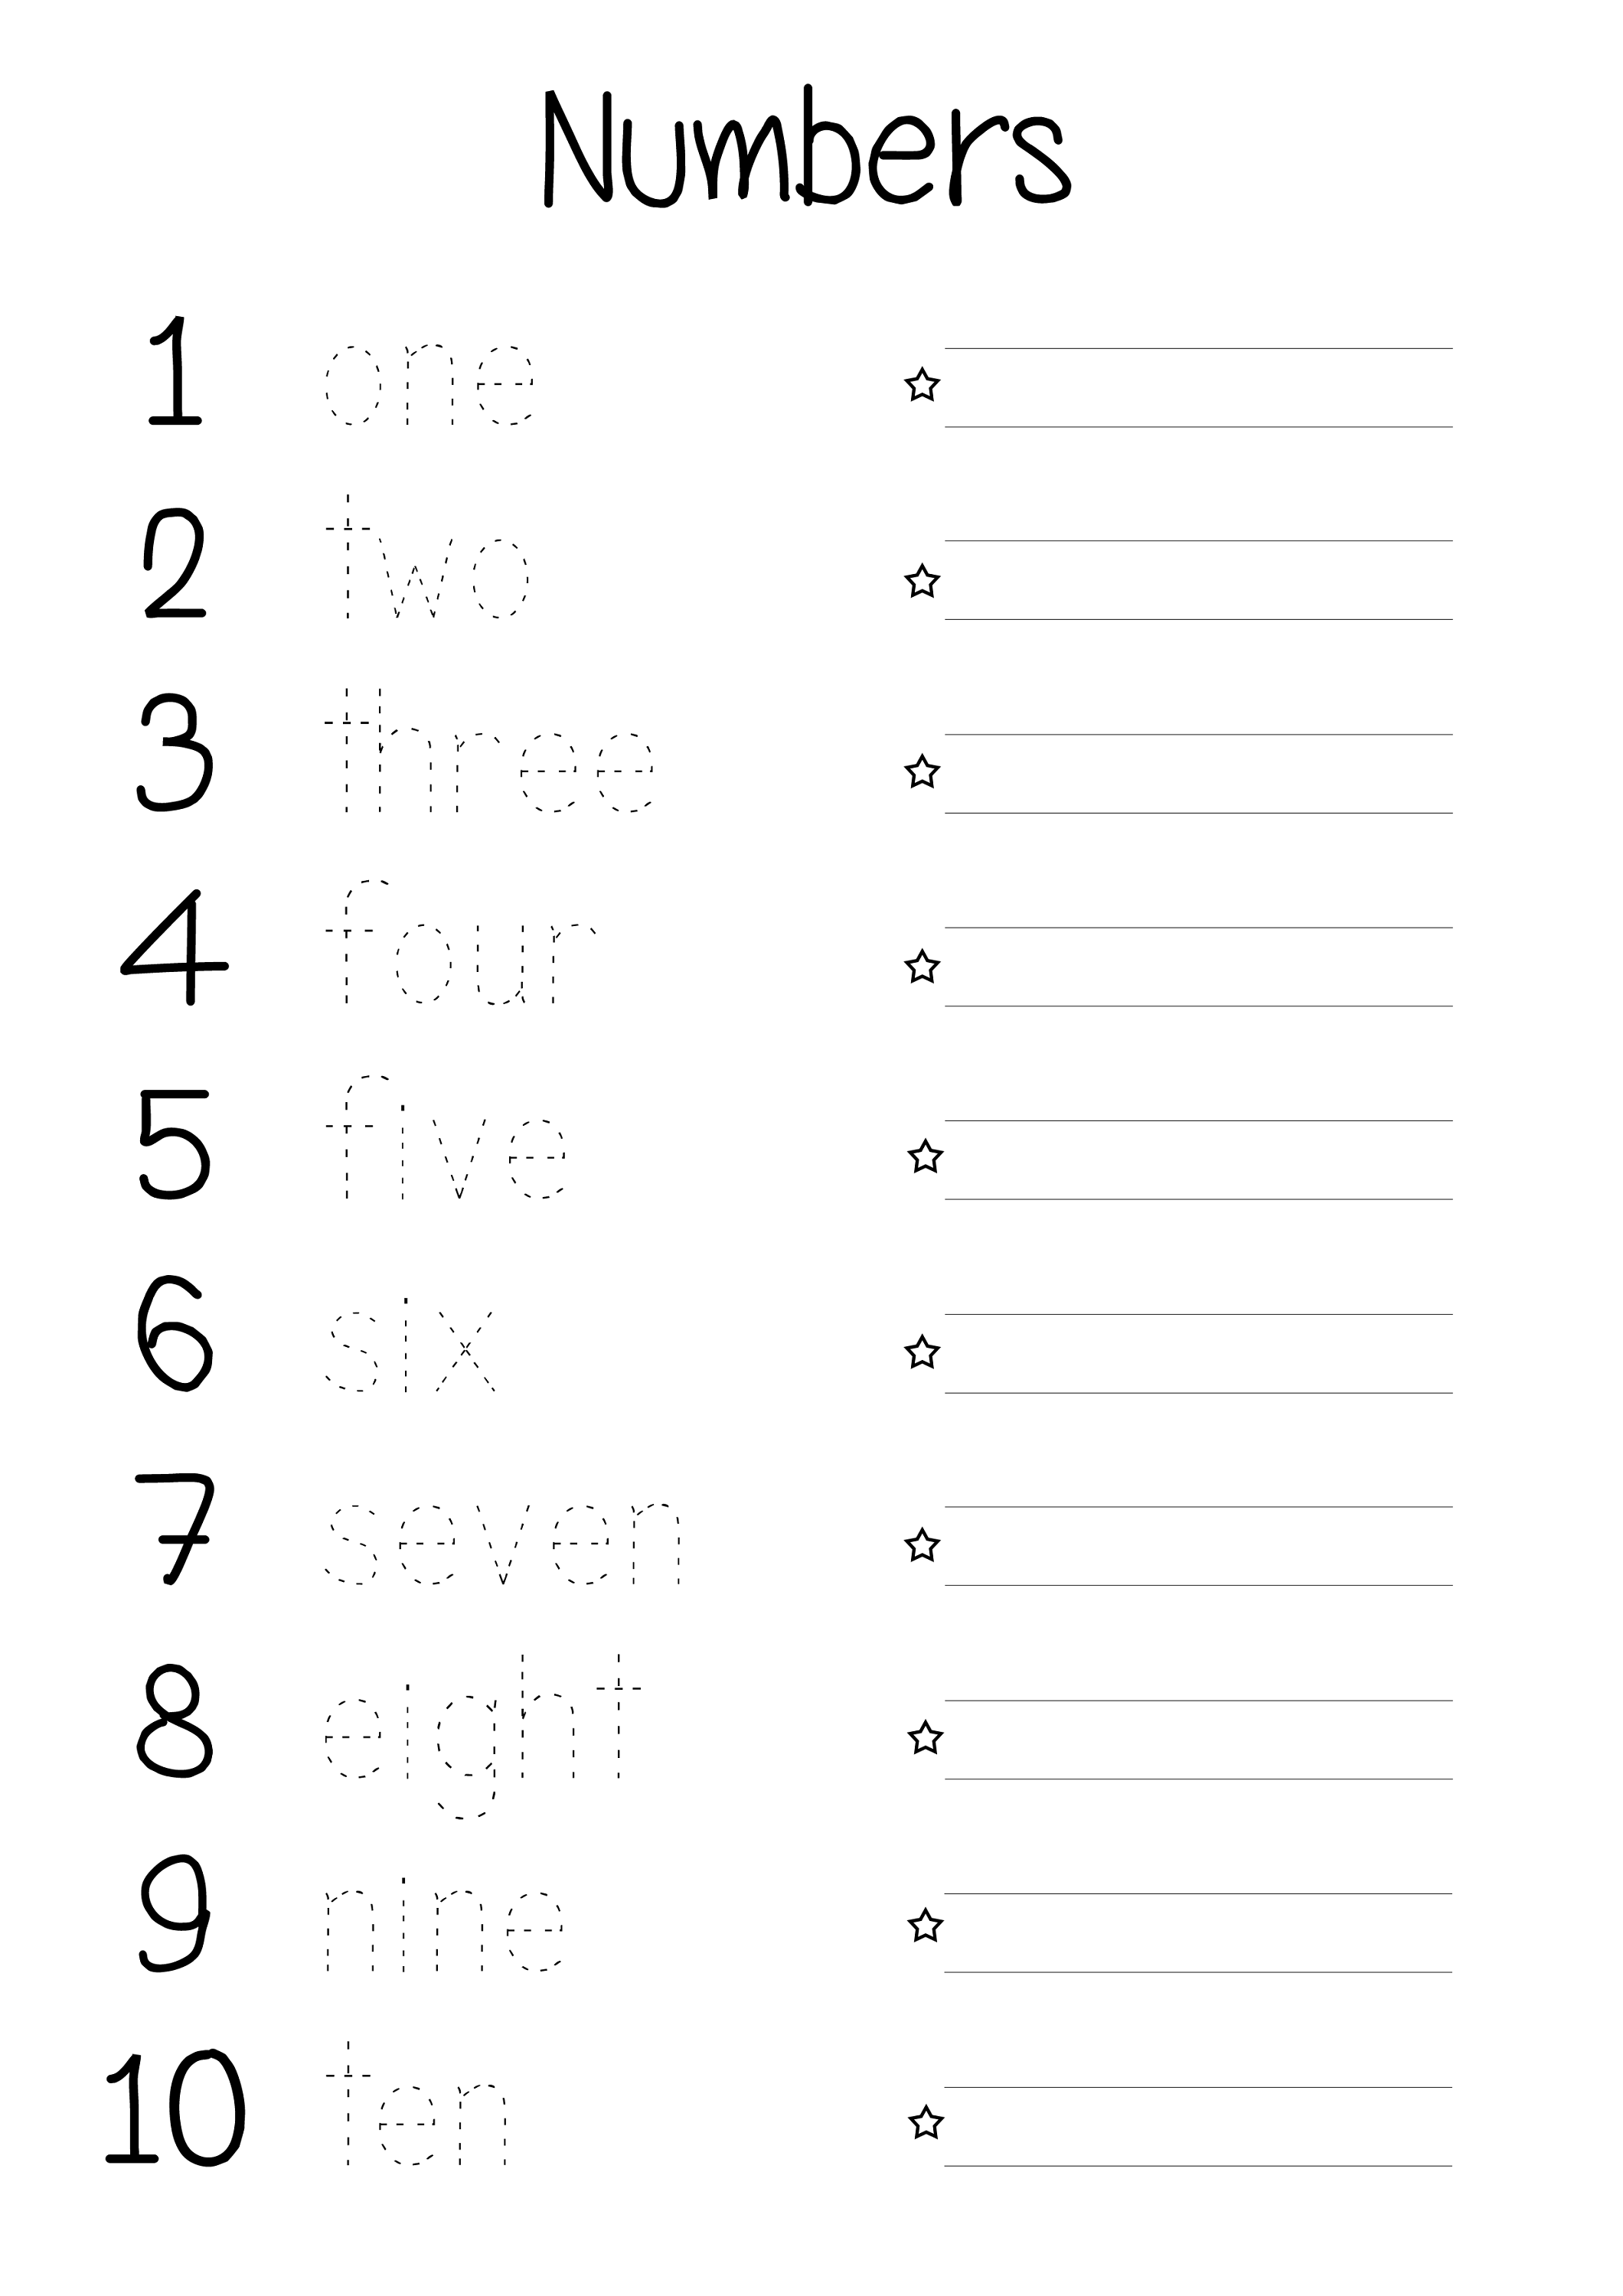 number-words-number-sense-printables-and-activities-numbers-0-10